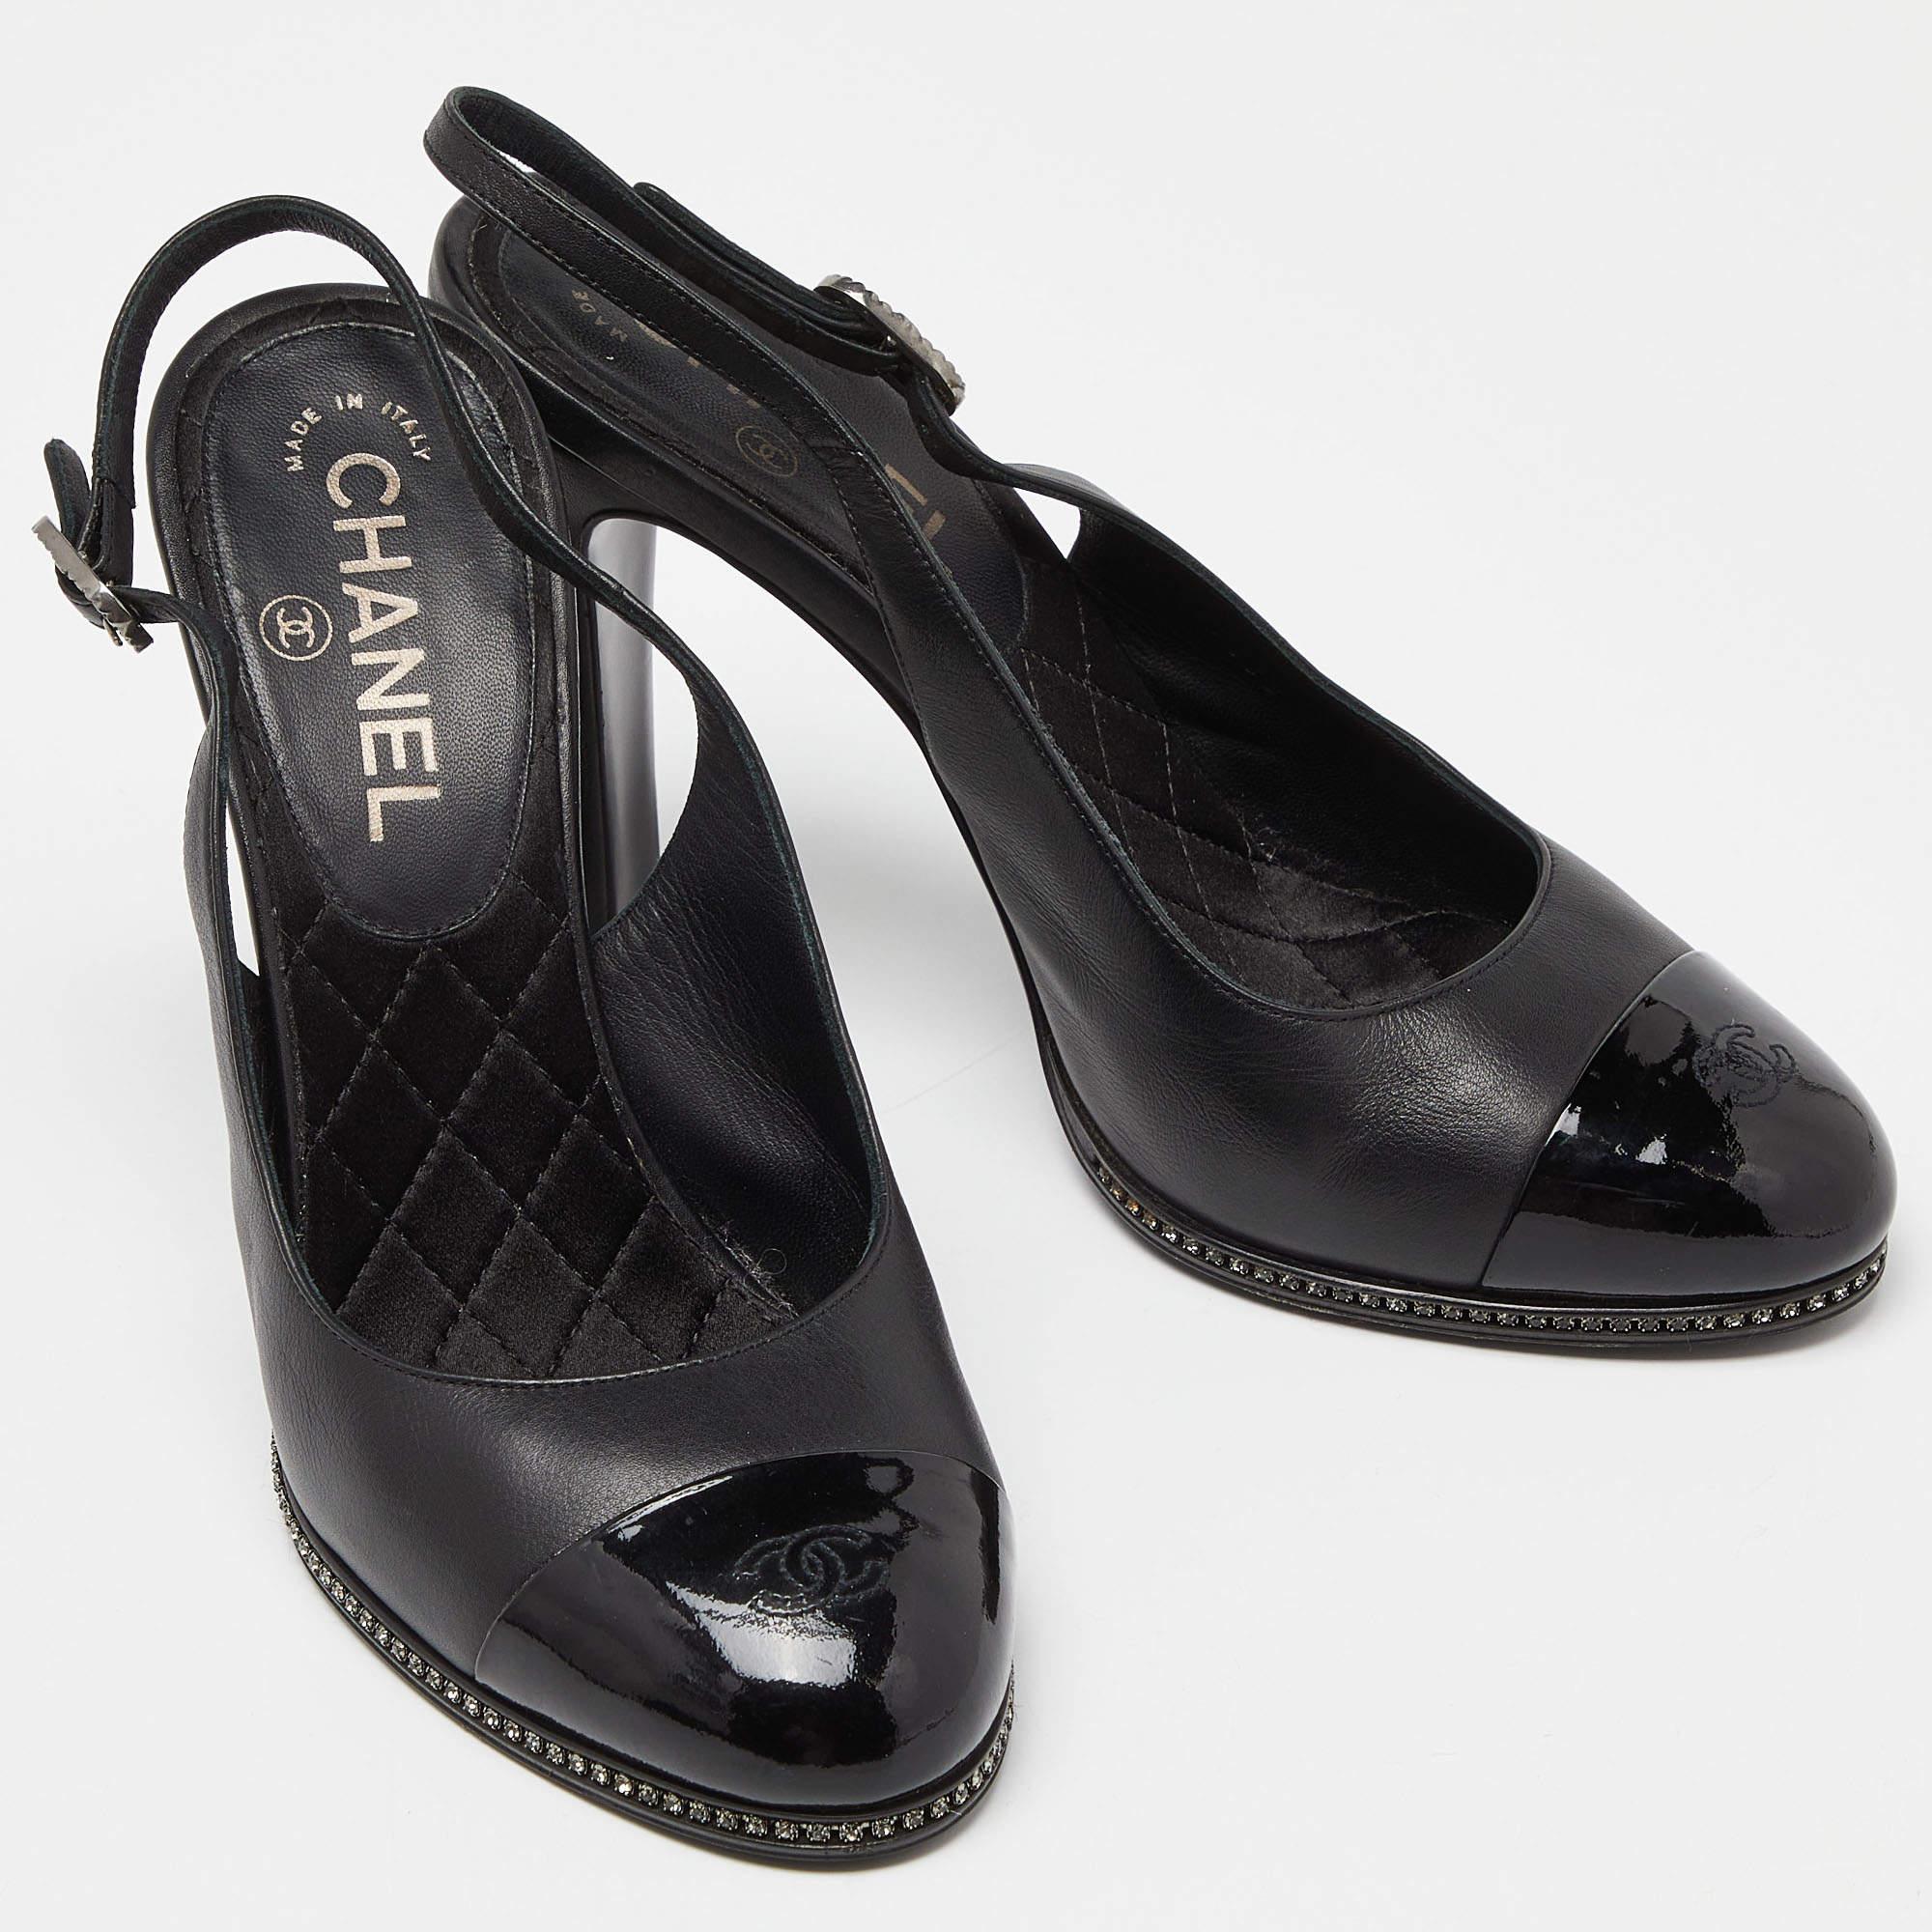 Chanel Black Patent and Leather CC Cap Toe Slingback Pumps Size 38.5 In Good Condition For Sale In Dubai, Al Qouz 2